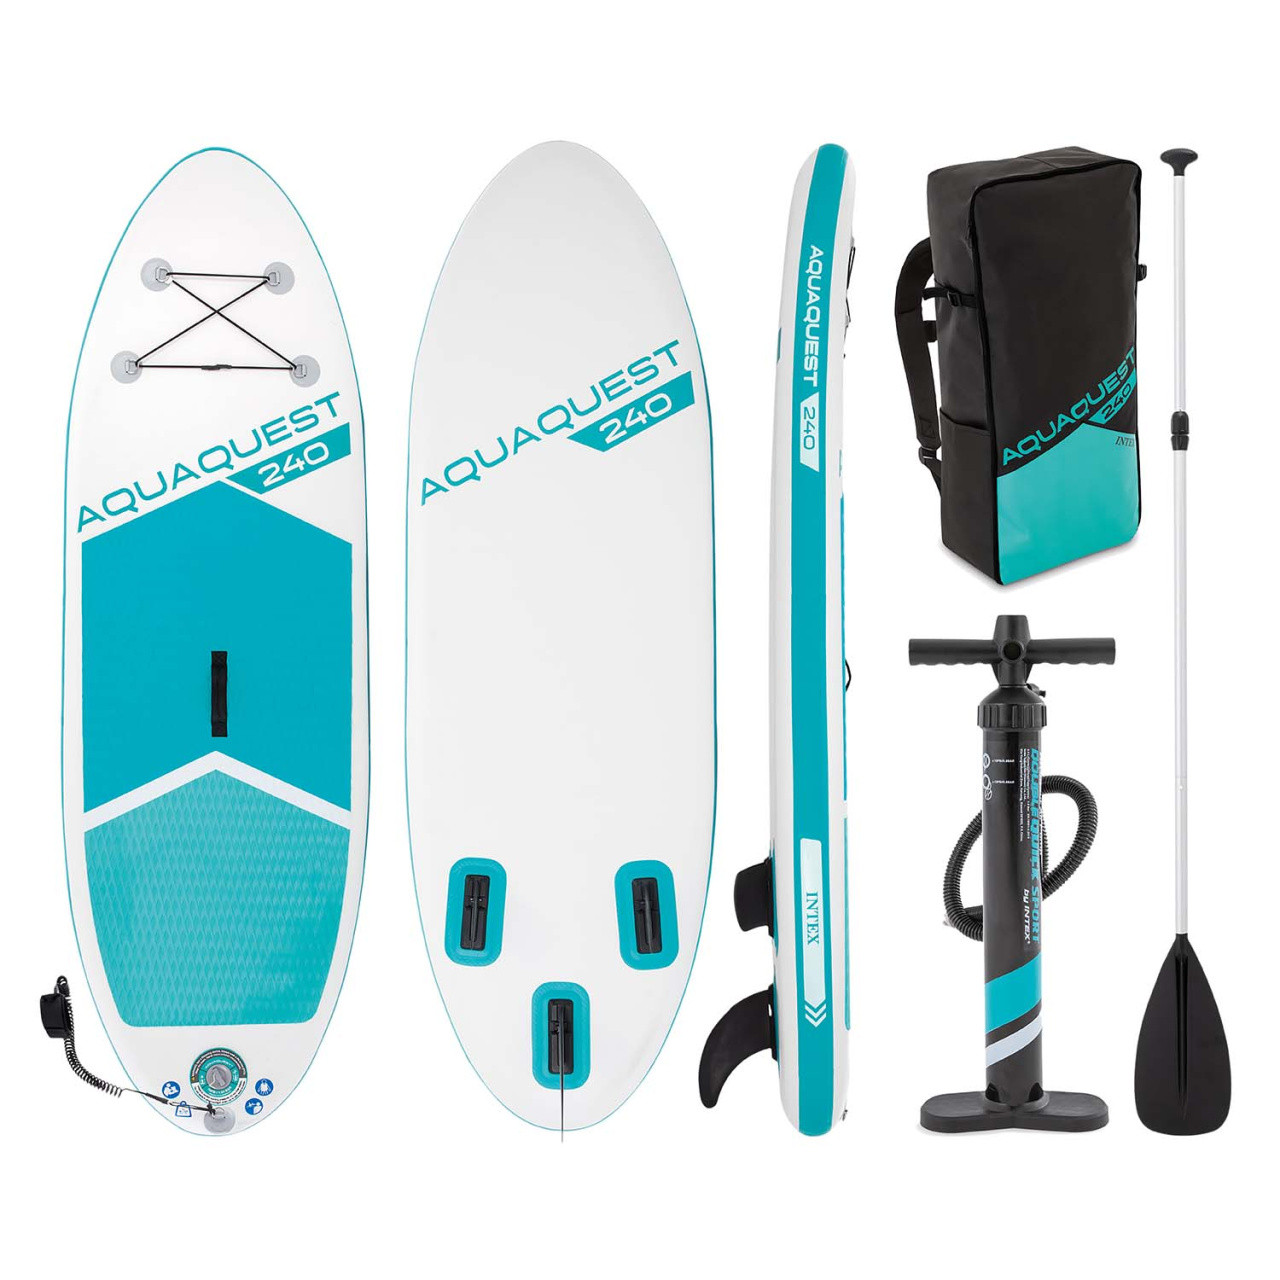 Надувна дошка для серфінгу (SUP-борд) Aqua Quest 240 Intex 68241 (13*76*240 см., весло, ліш, насос, сумка, до 120 кг.) [Склад